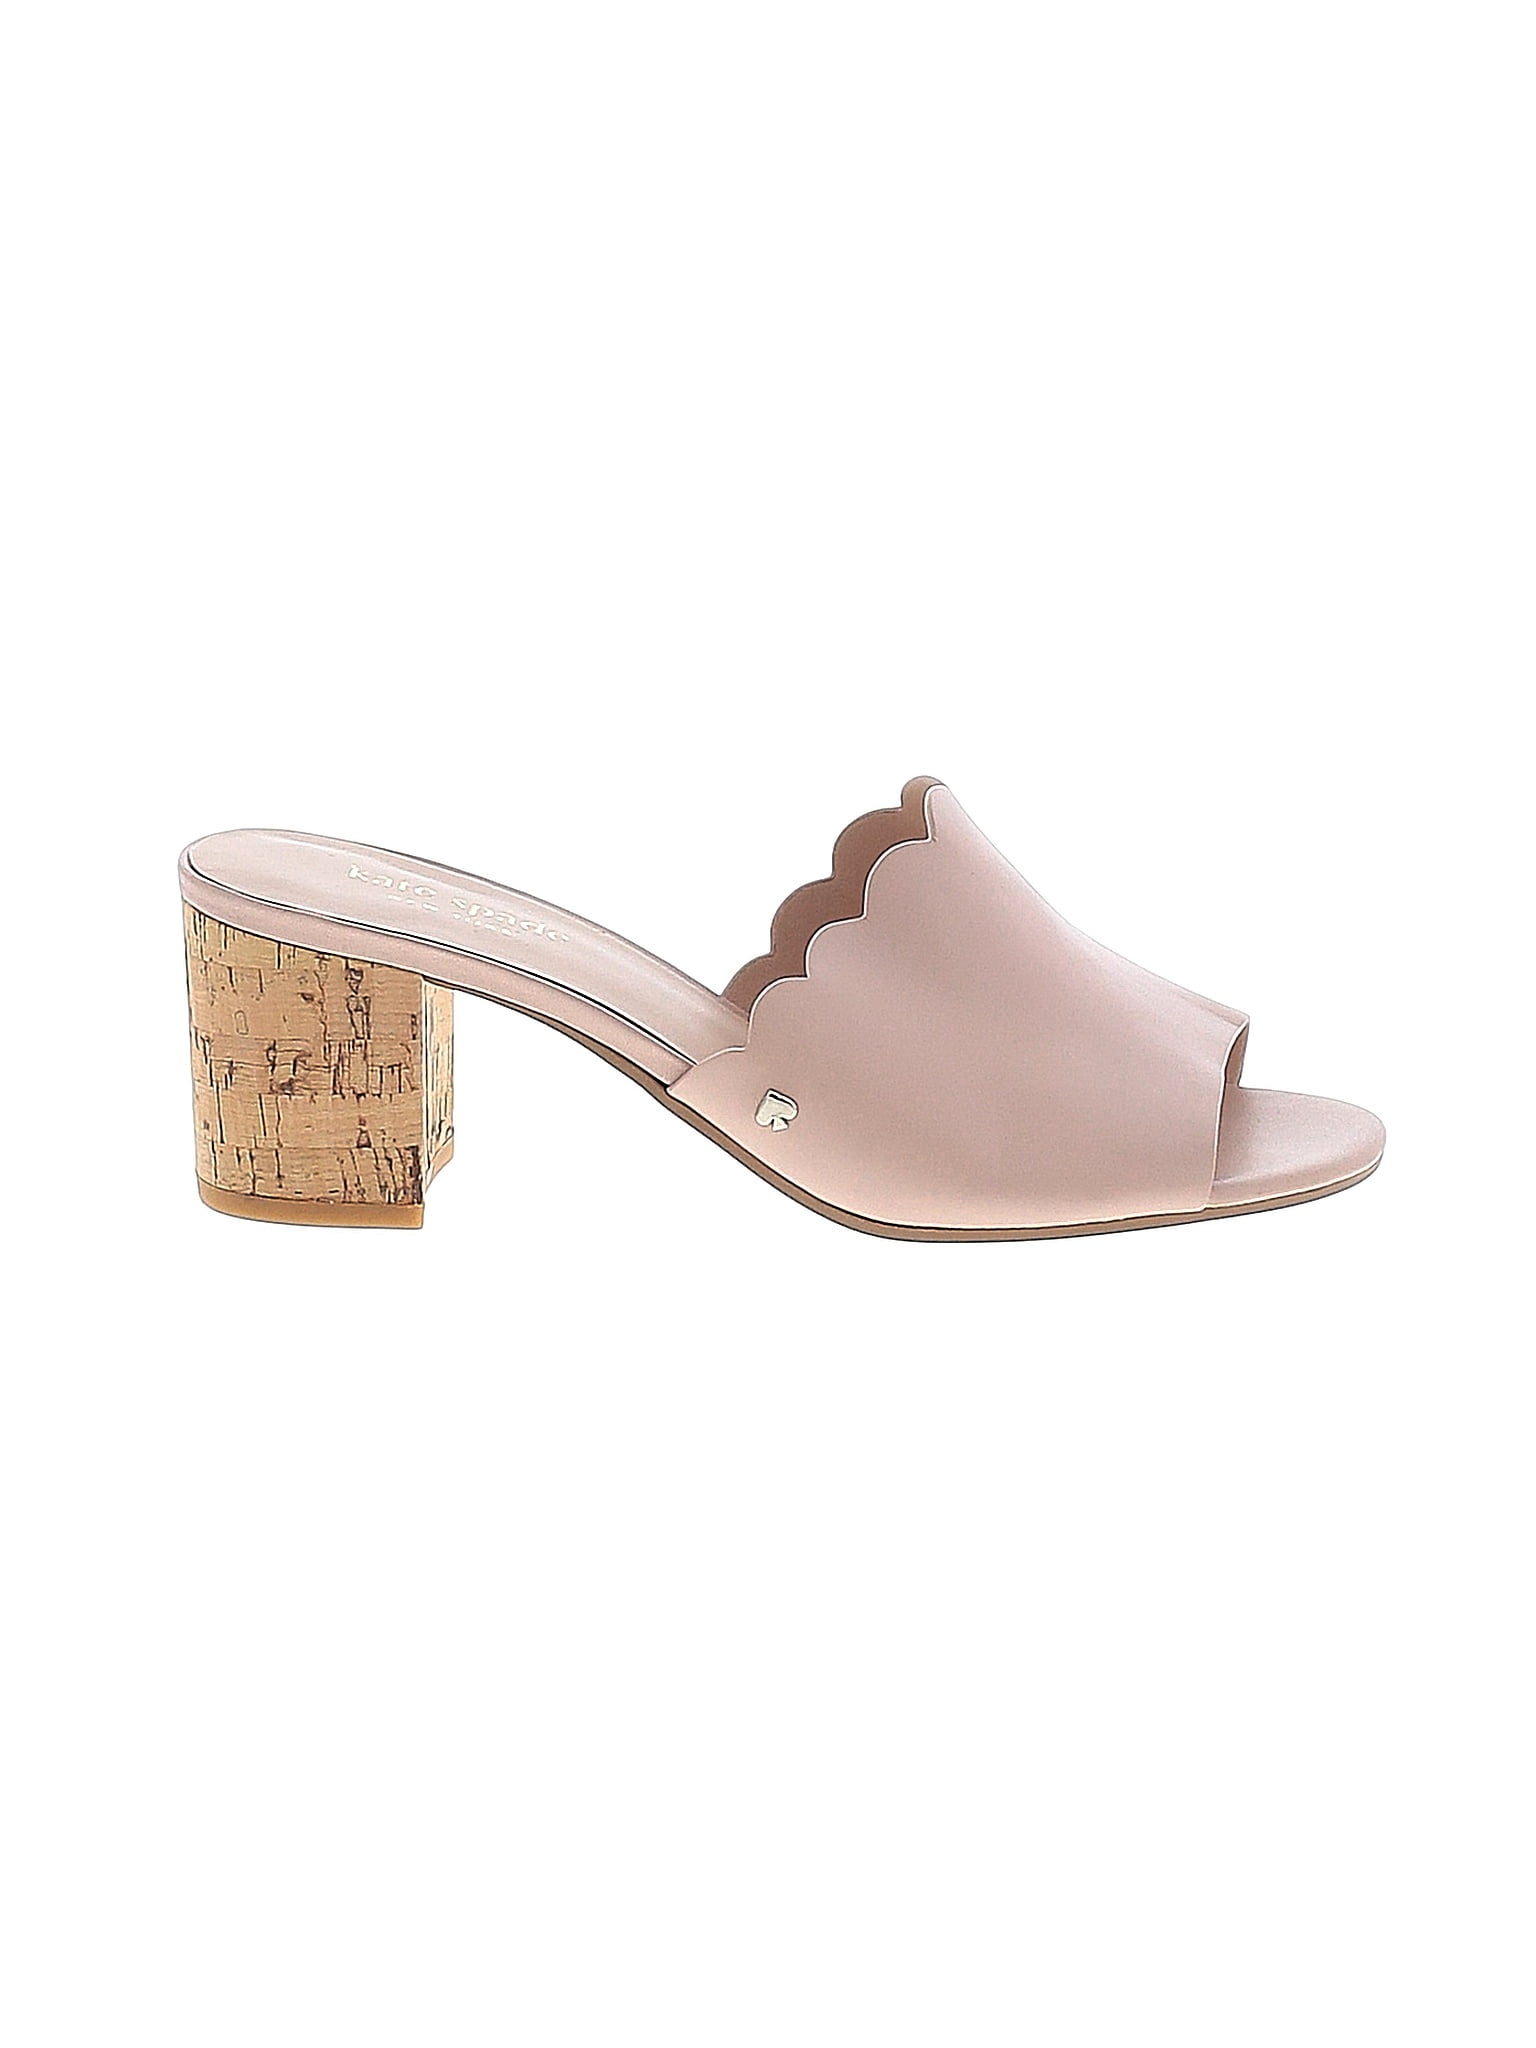 Kate Spade New York Solid Tan Pink Mule/Clog Size 6 1/2 - 55% off | ThredUp